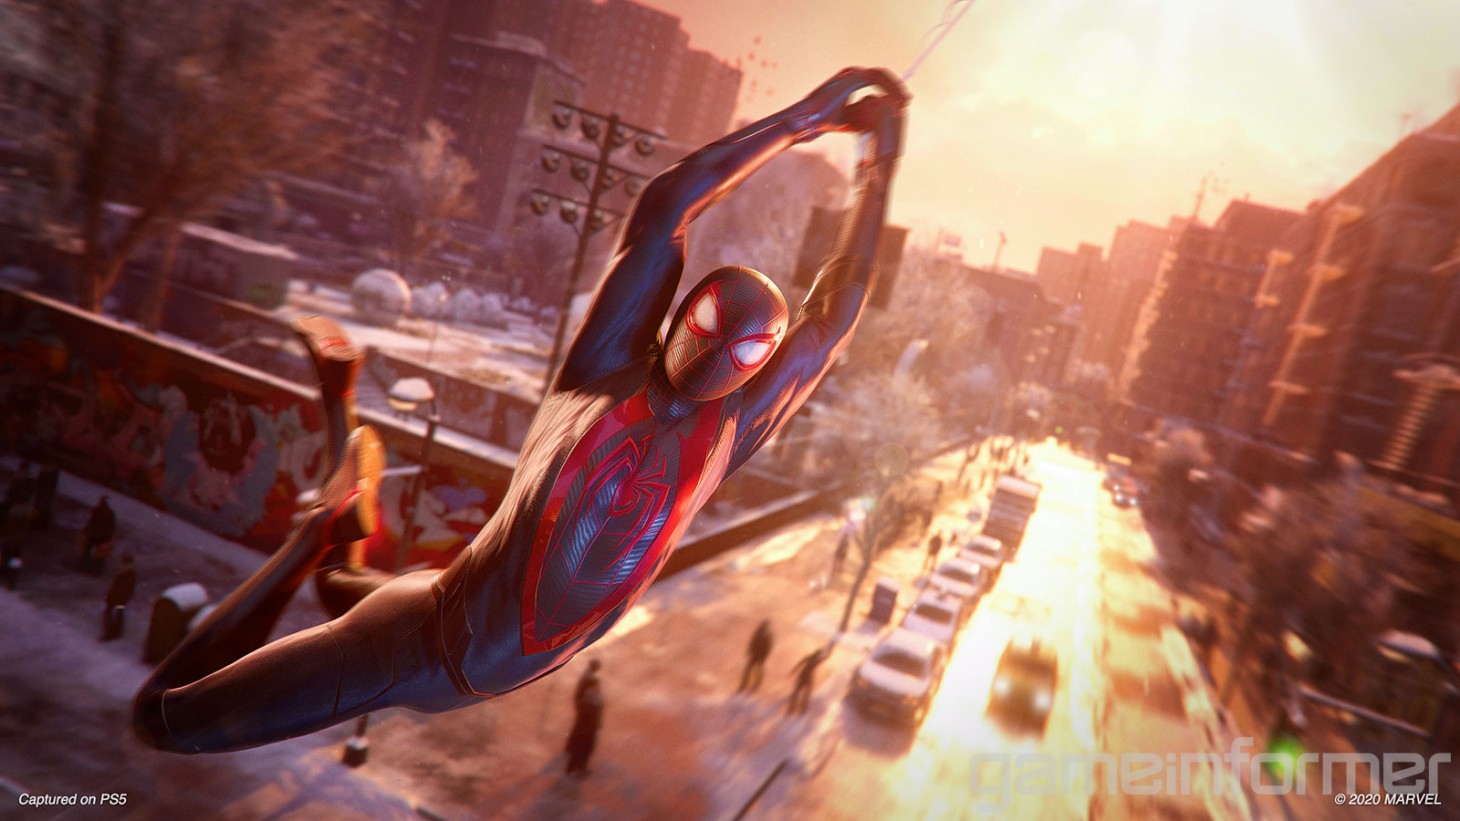  Marvel's Spider-Man: Miles Morales - PlayStation 4